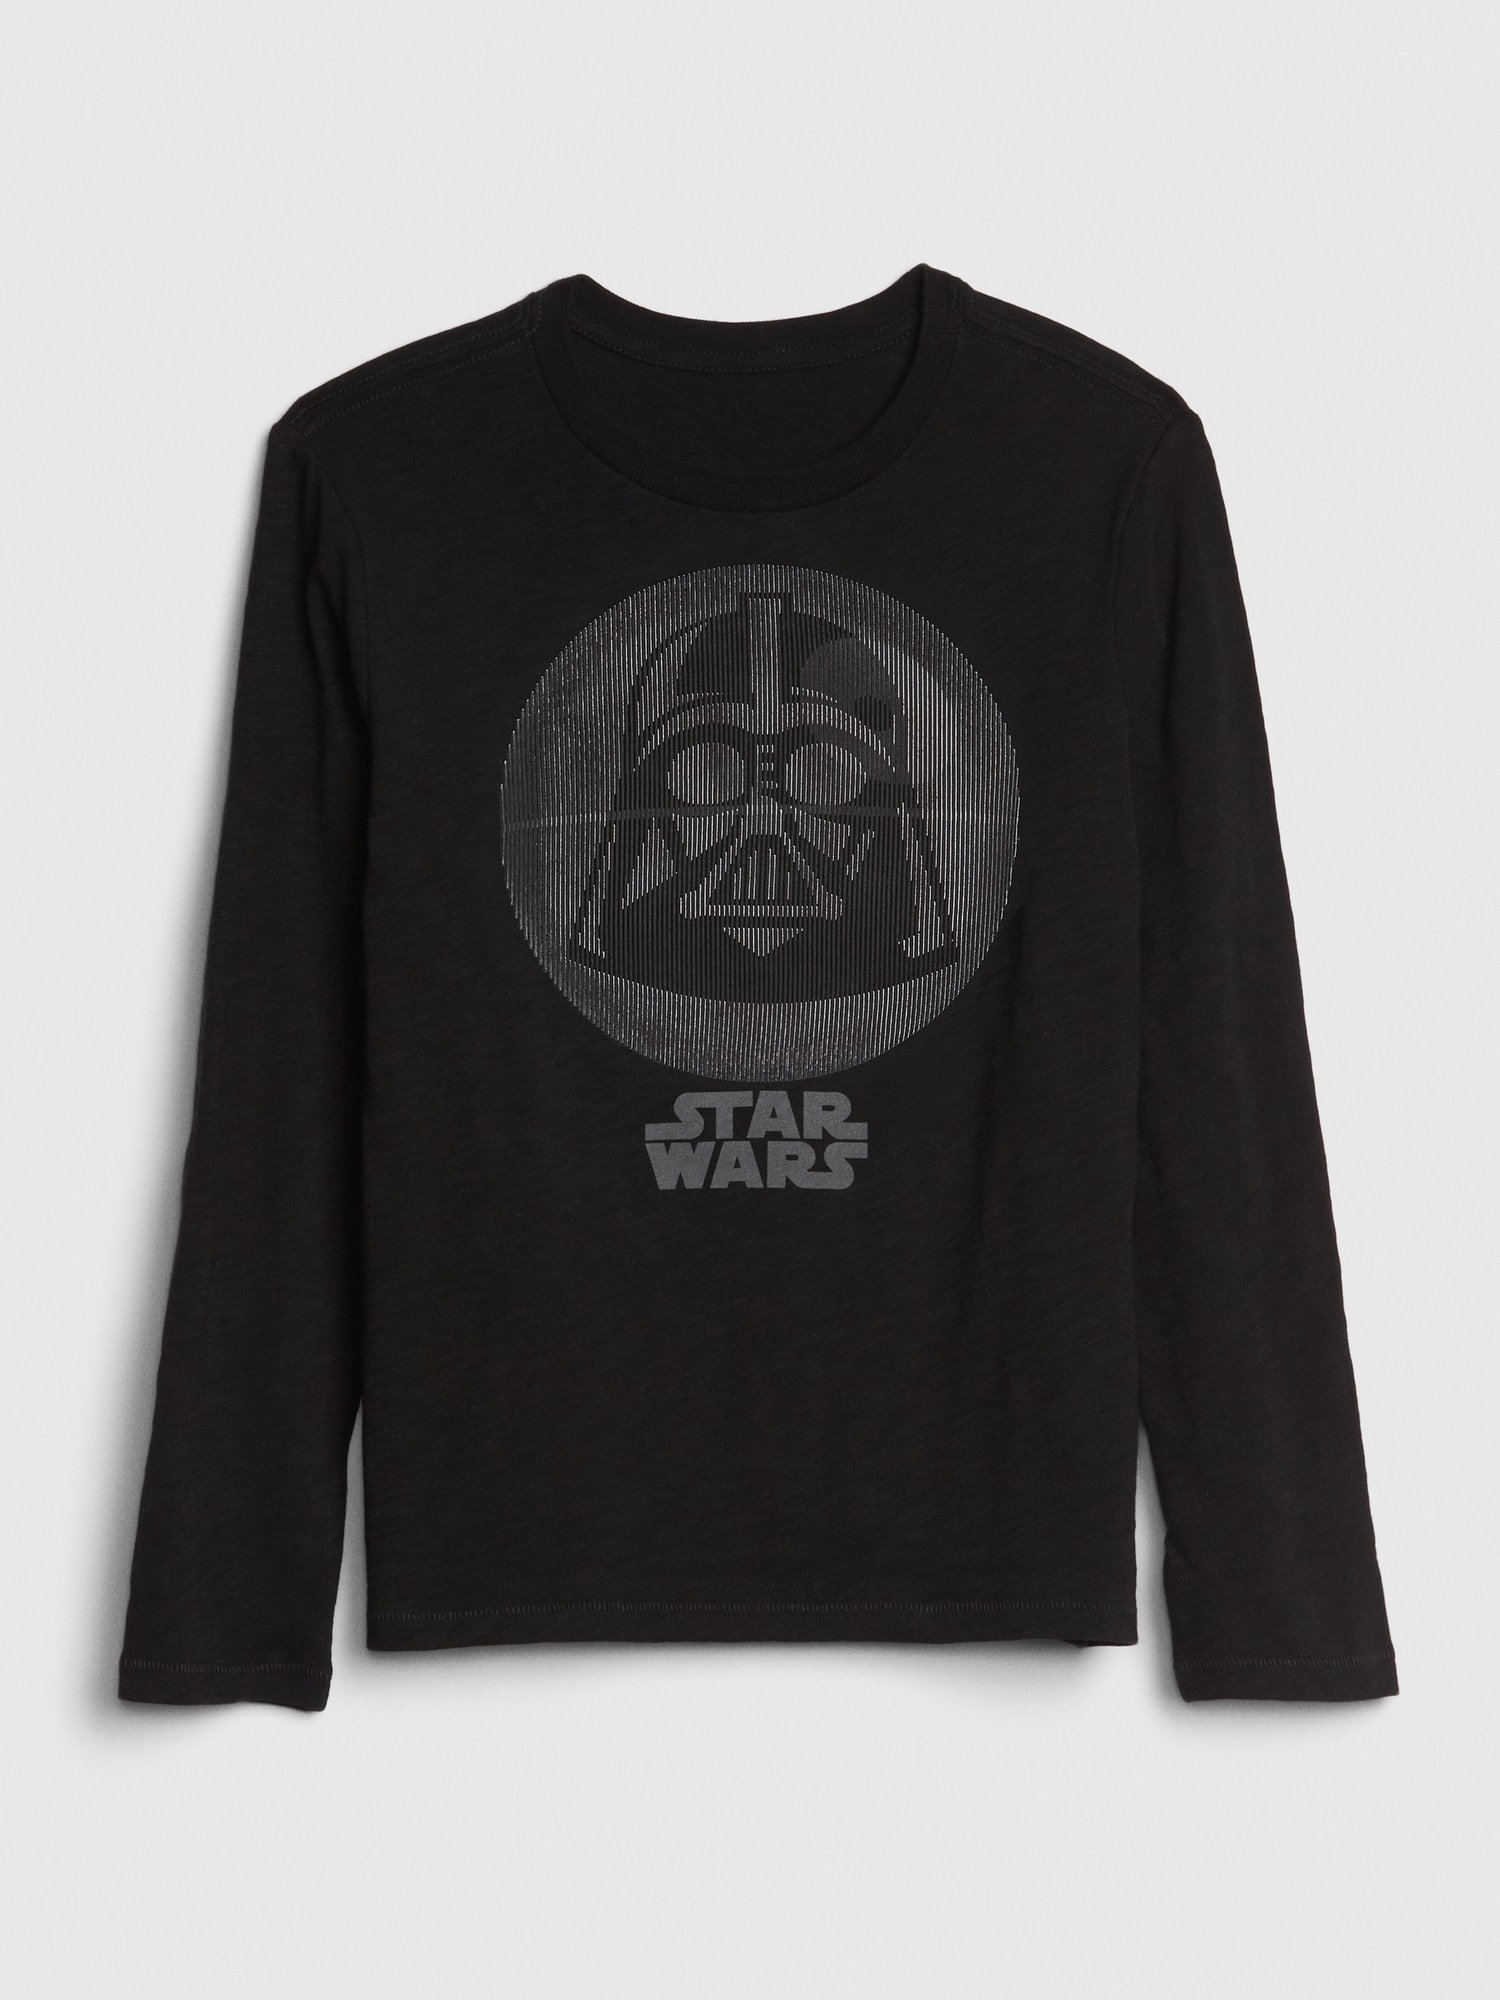 Star Wars™ Grafik T-Shirt product image